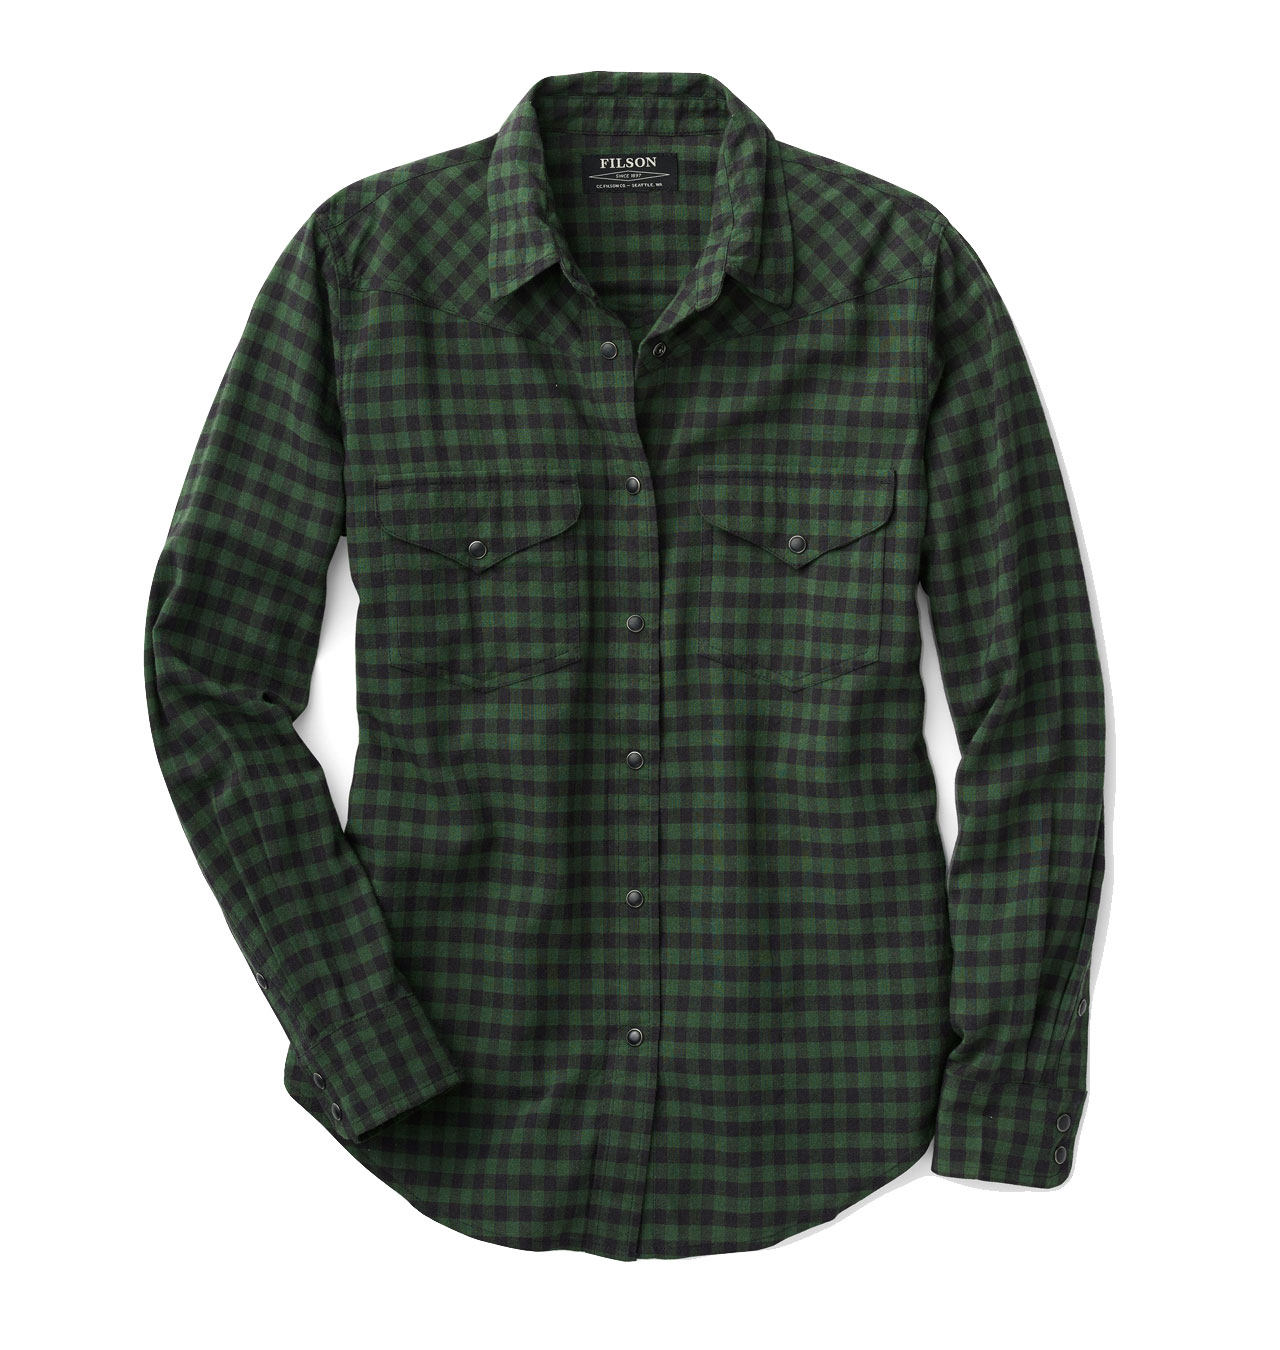 Filson - Womens Pioneer Shirt - Green/Black Check